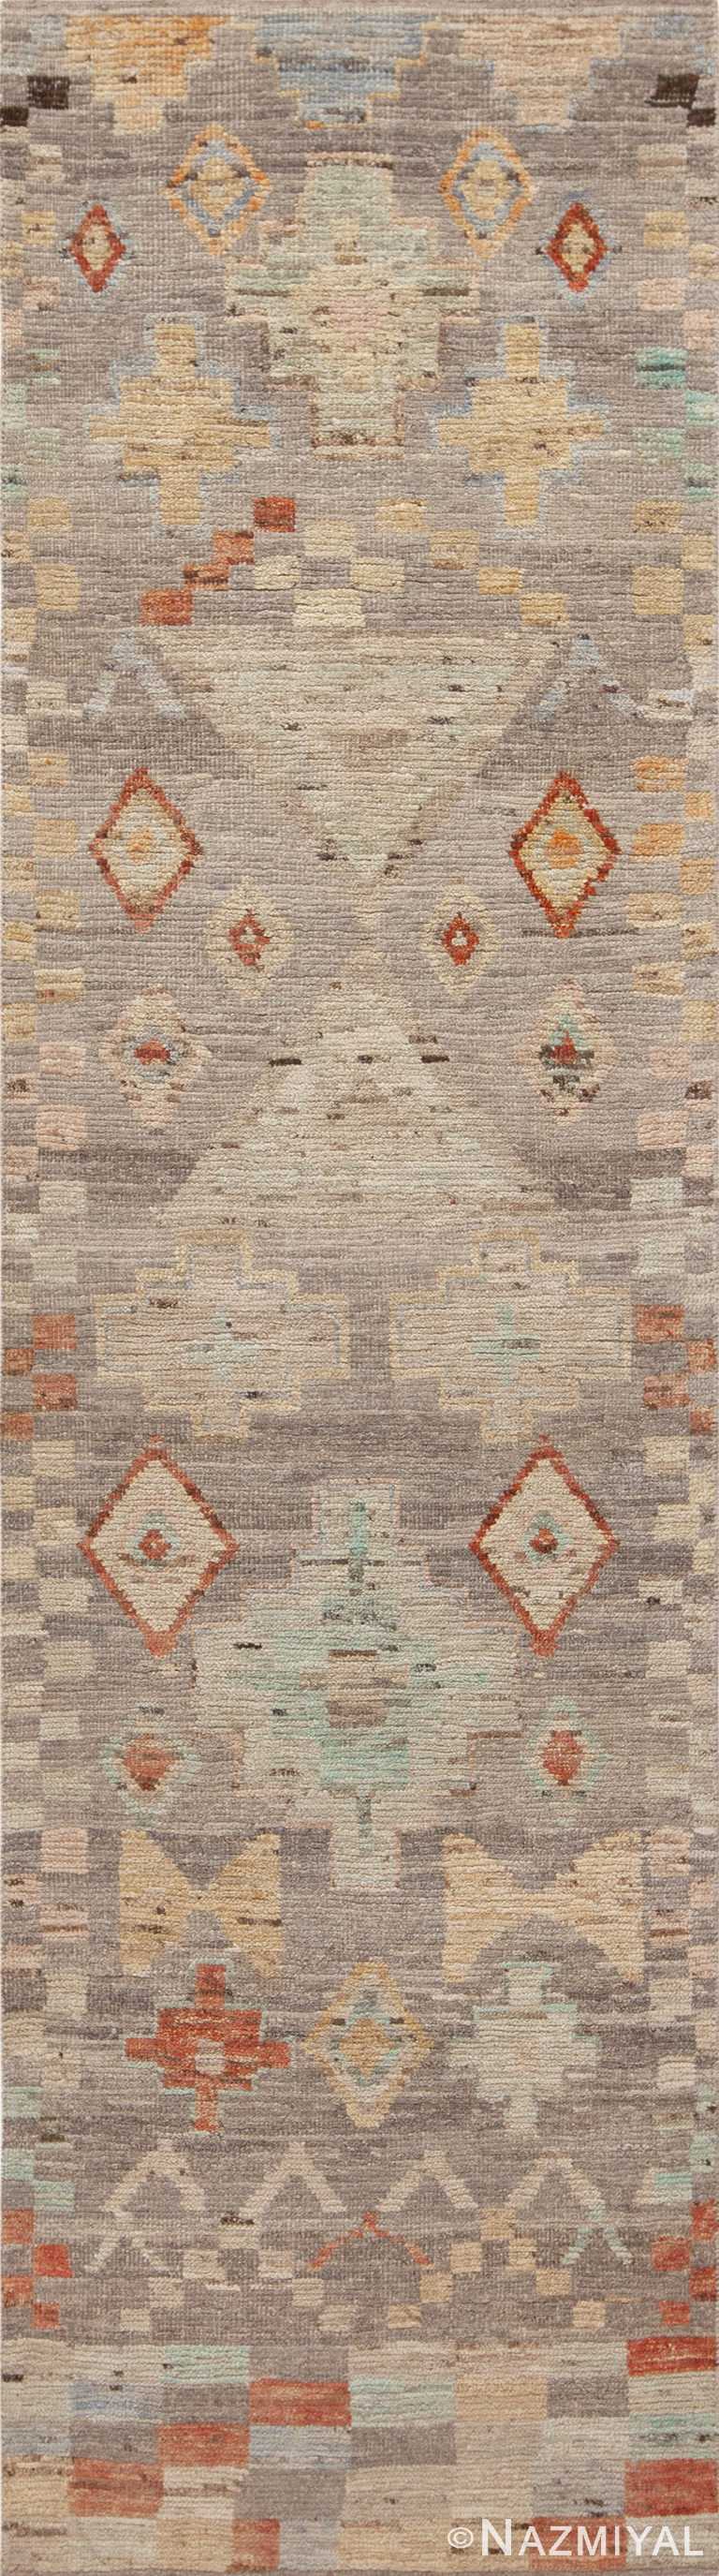 Grey Rustic Tribal Geometric Design Hallway Runner Rug 11119 by Nazmiyal Antique Rugs